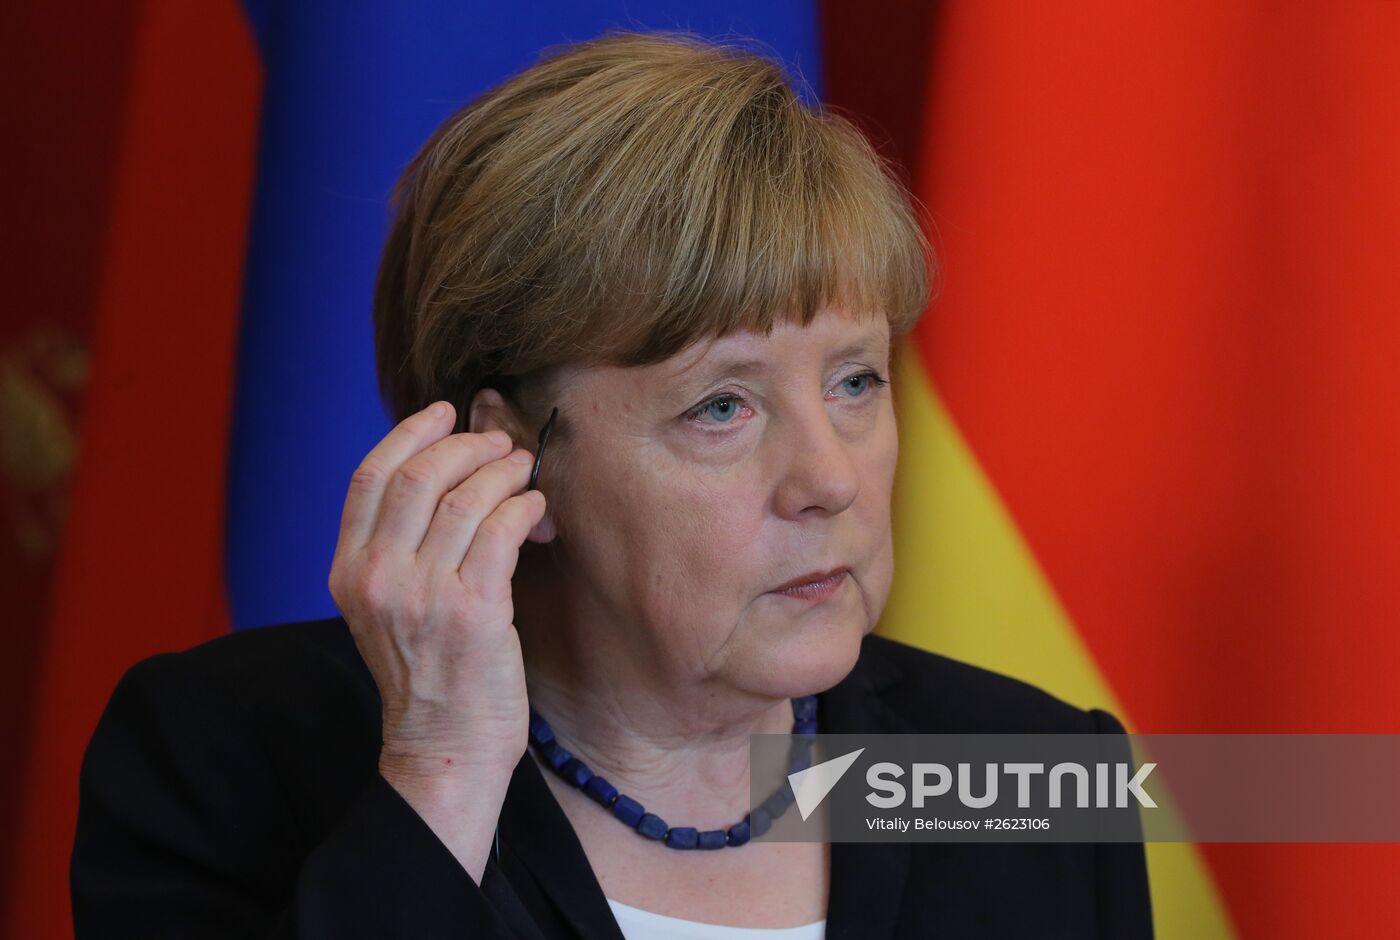 Vladimir Putin and Angela Merkel hold joint news conference